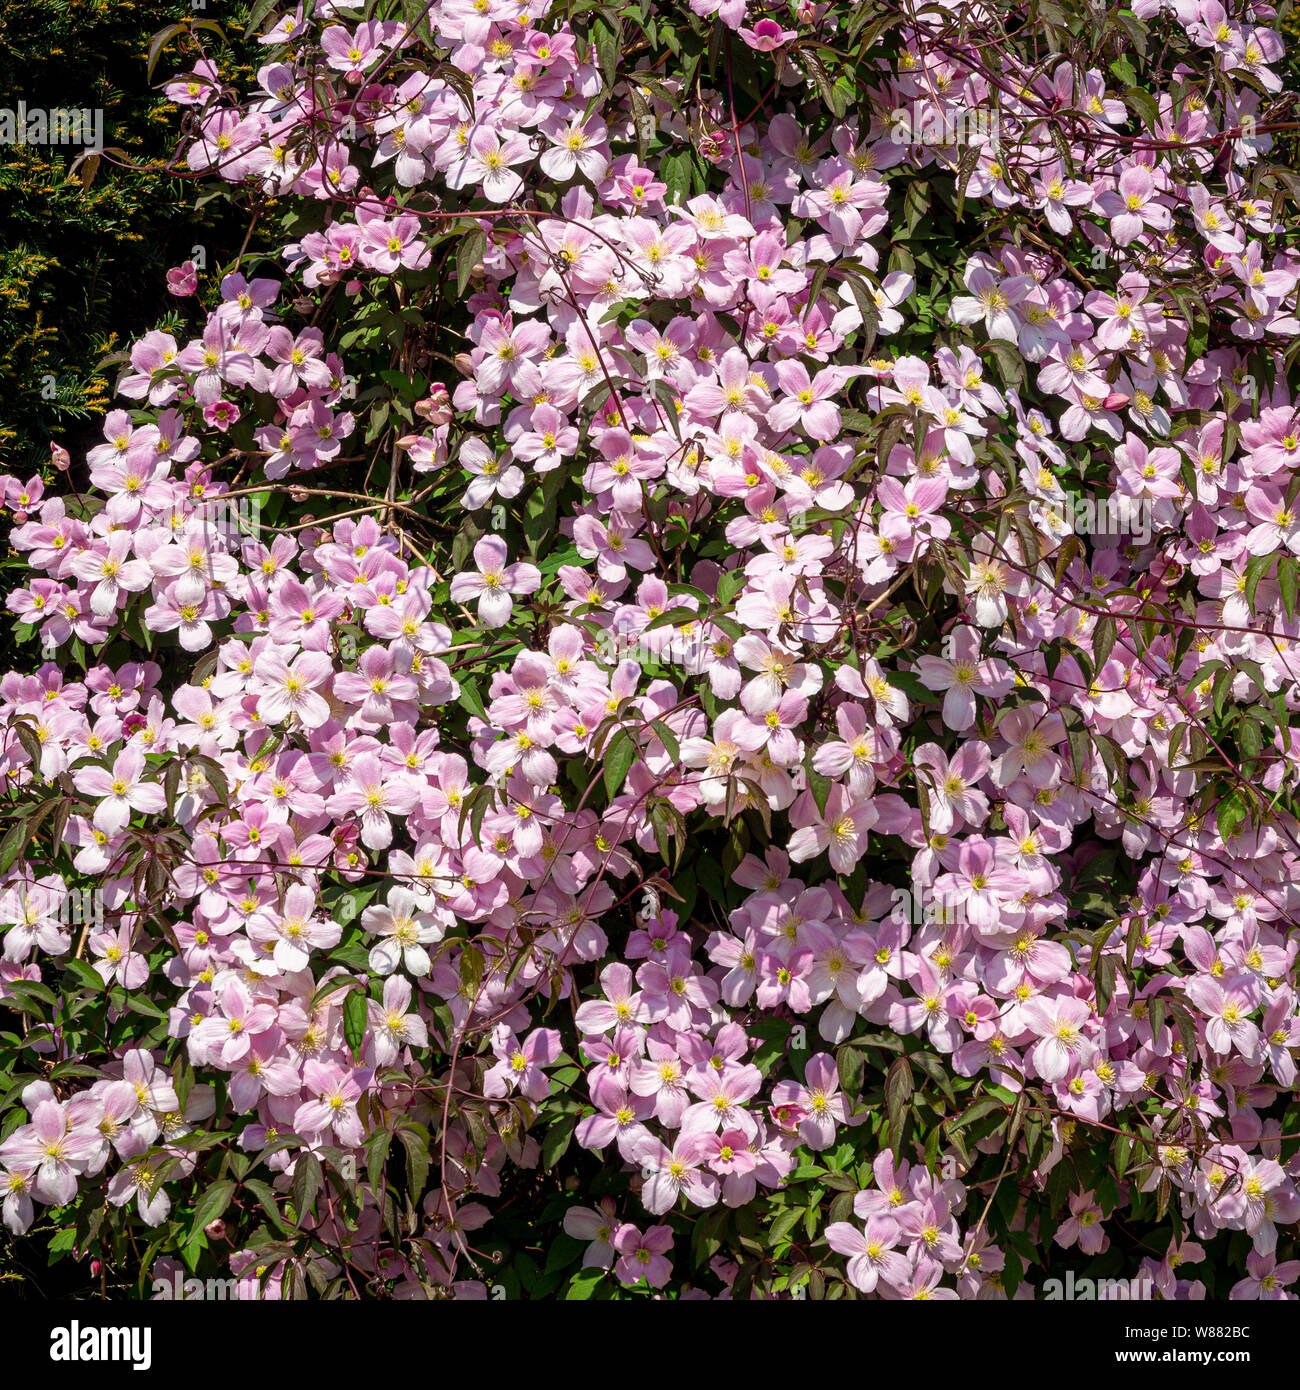 Clematis montana flowering Stock Photo